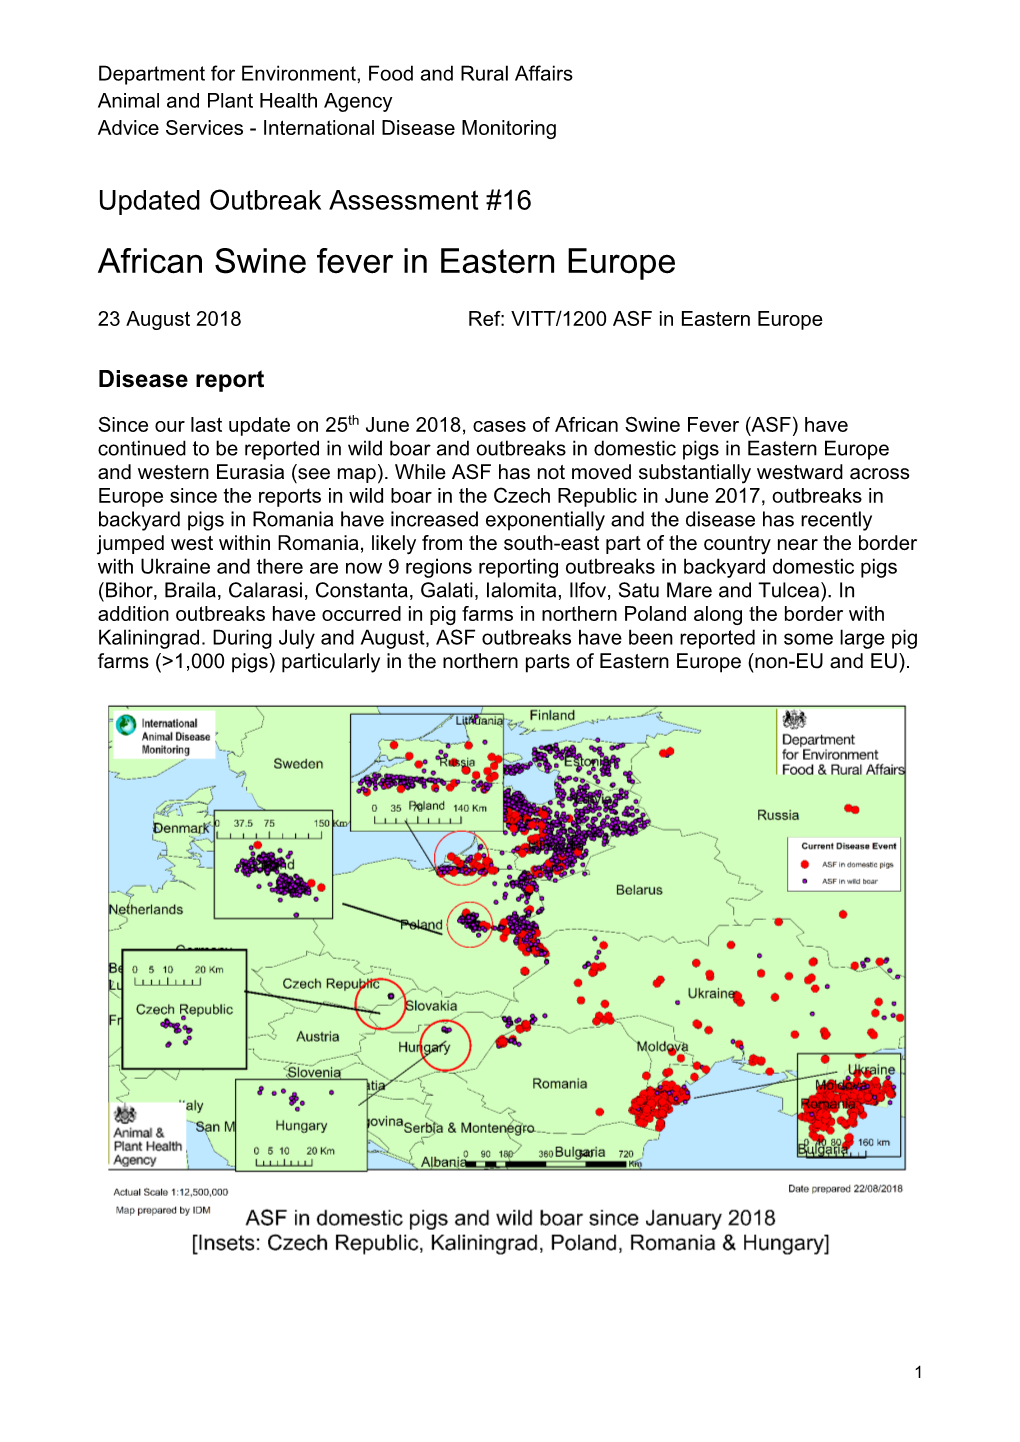 African Swine Fever in Eastern Europe